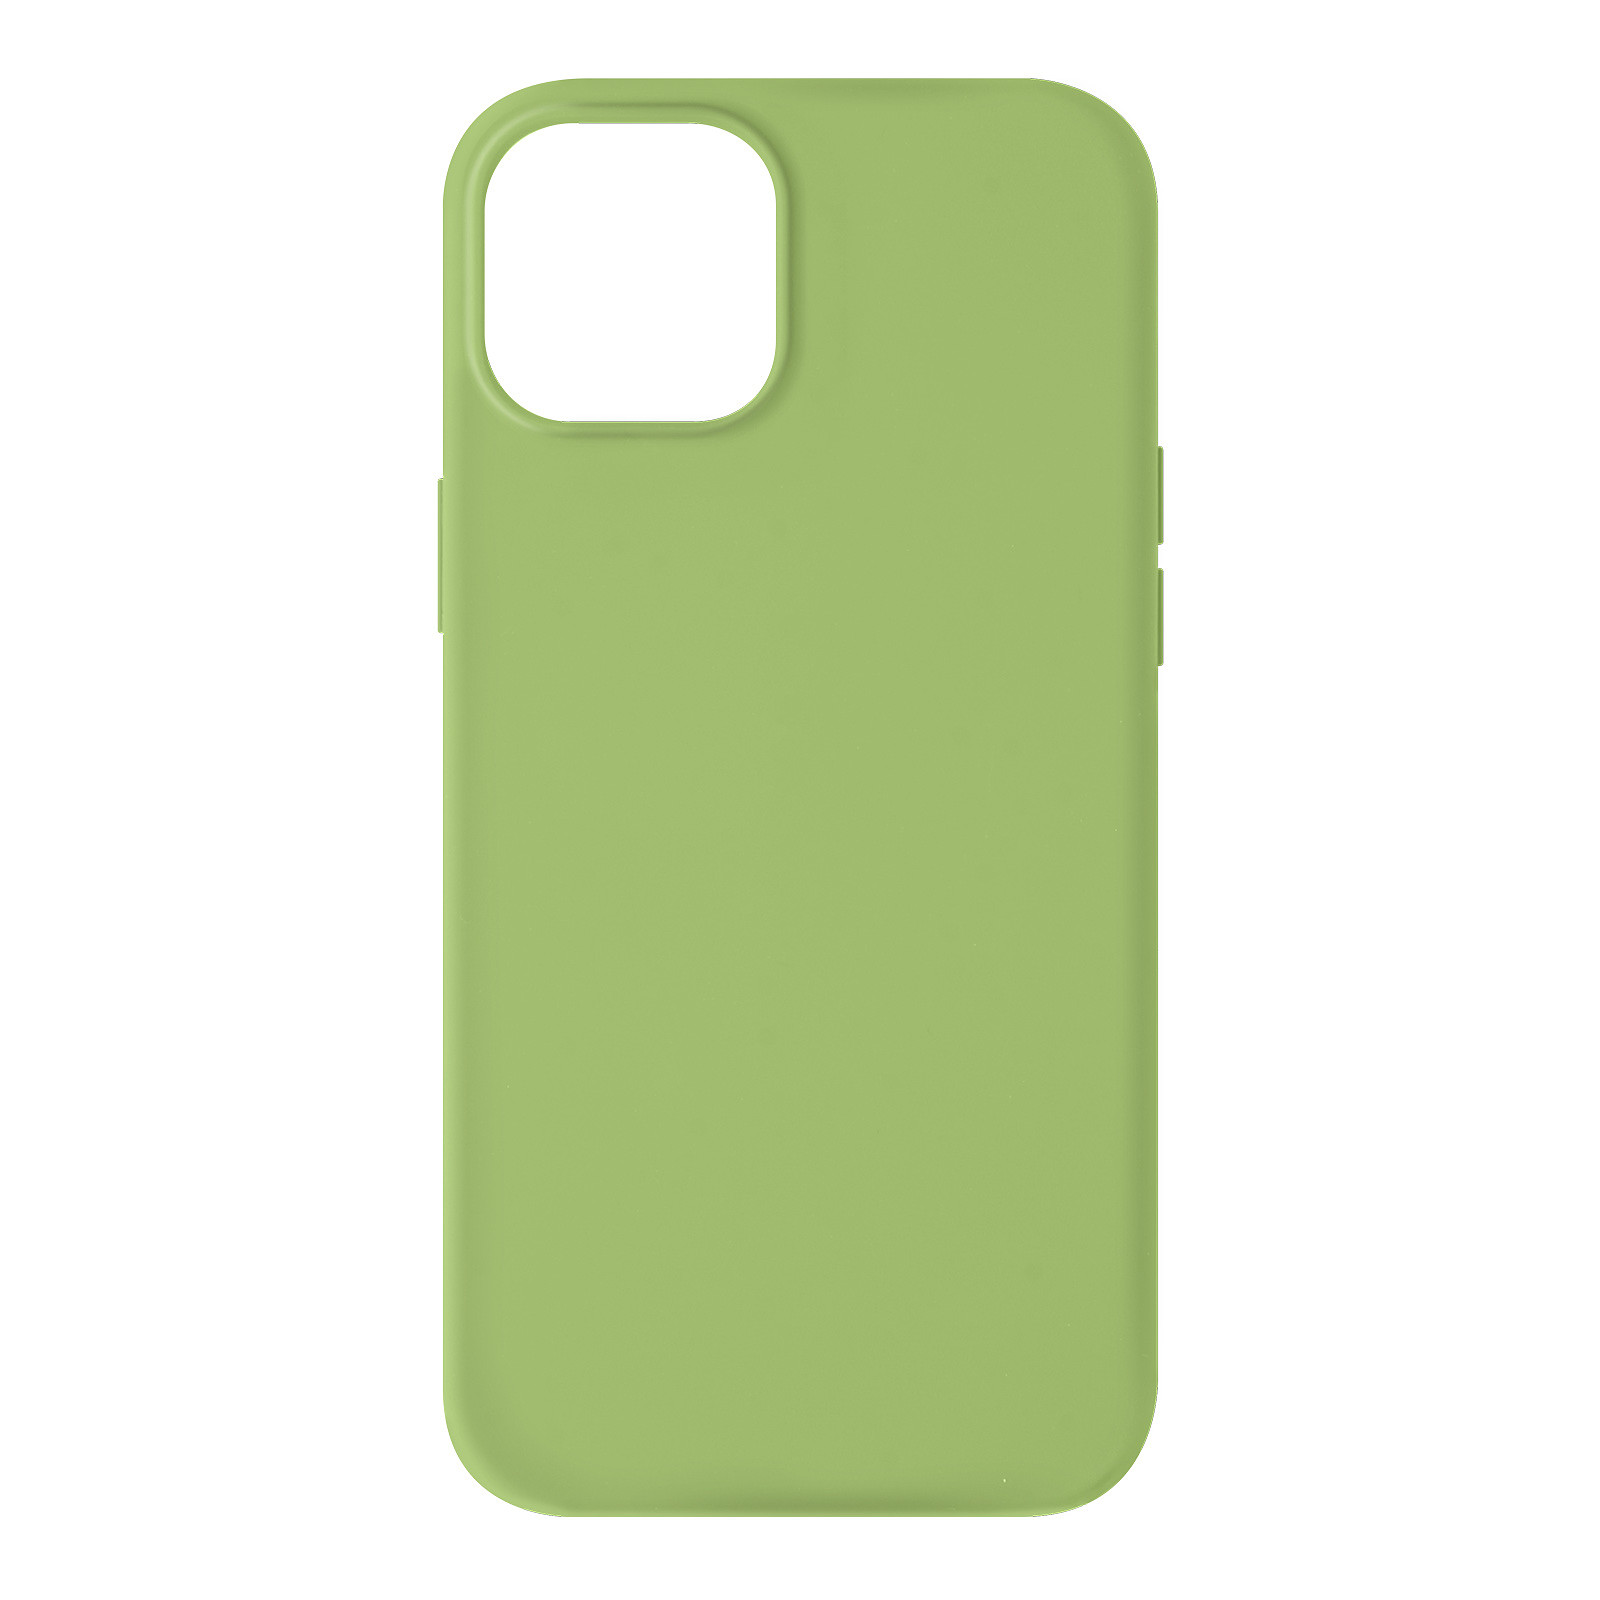 Avizar Coque pour iPhone 13 Silicone Semi-rigide Finition Soft-touch Vert tilleul - Coque telephone Avizar